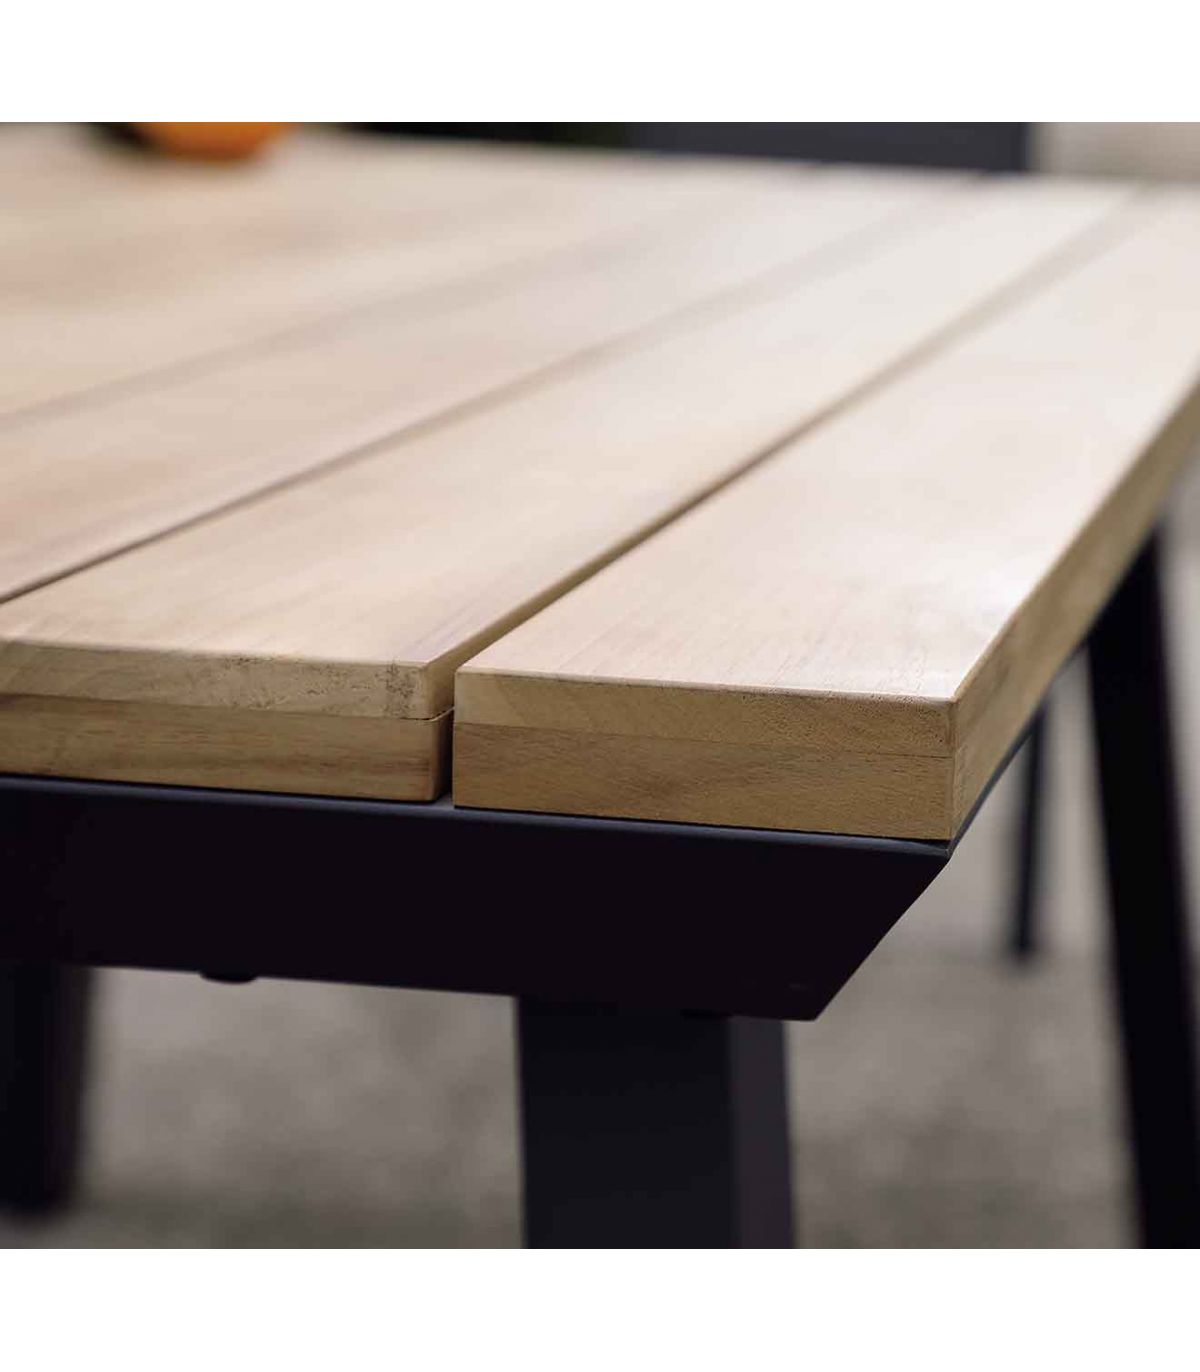 Mesa de exterior rectangular ALASKA madera de teca